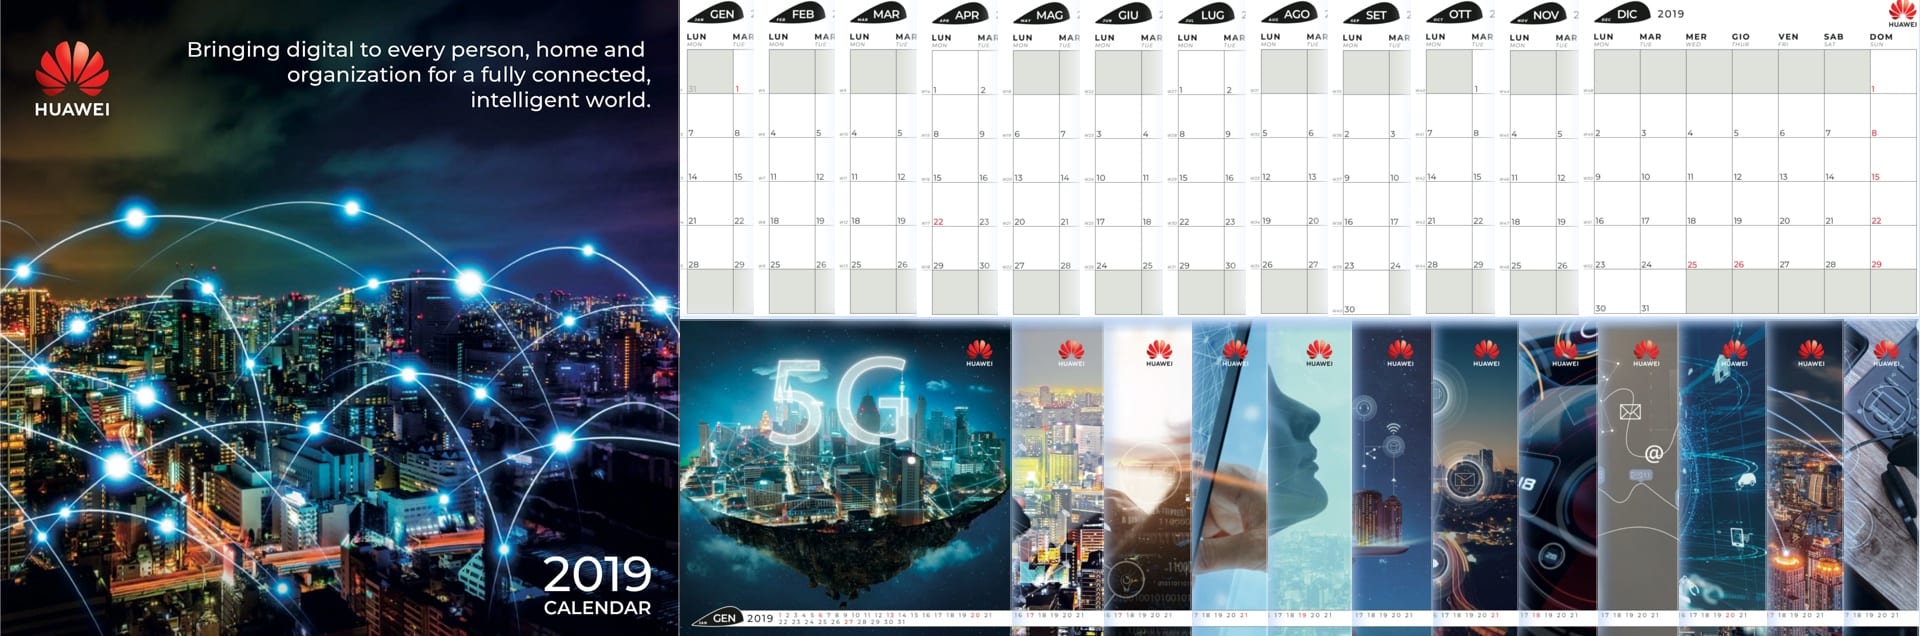 Huawei Calendario